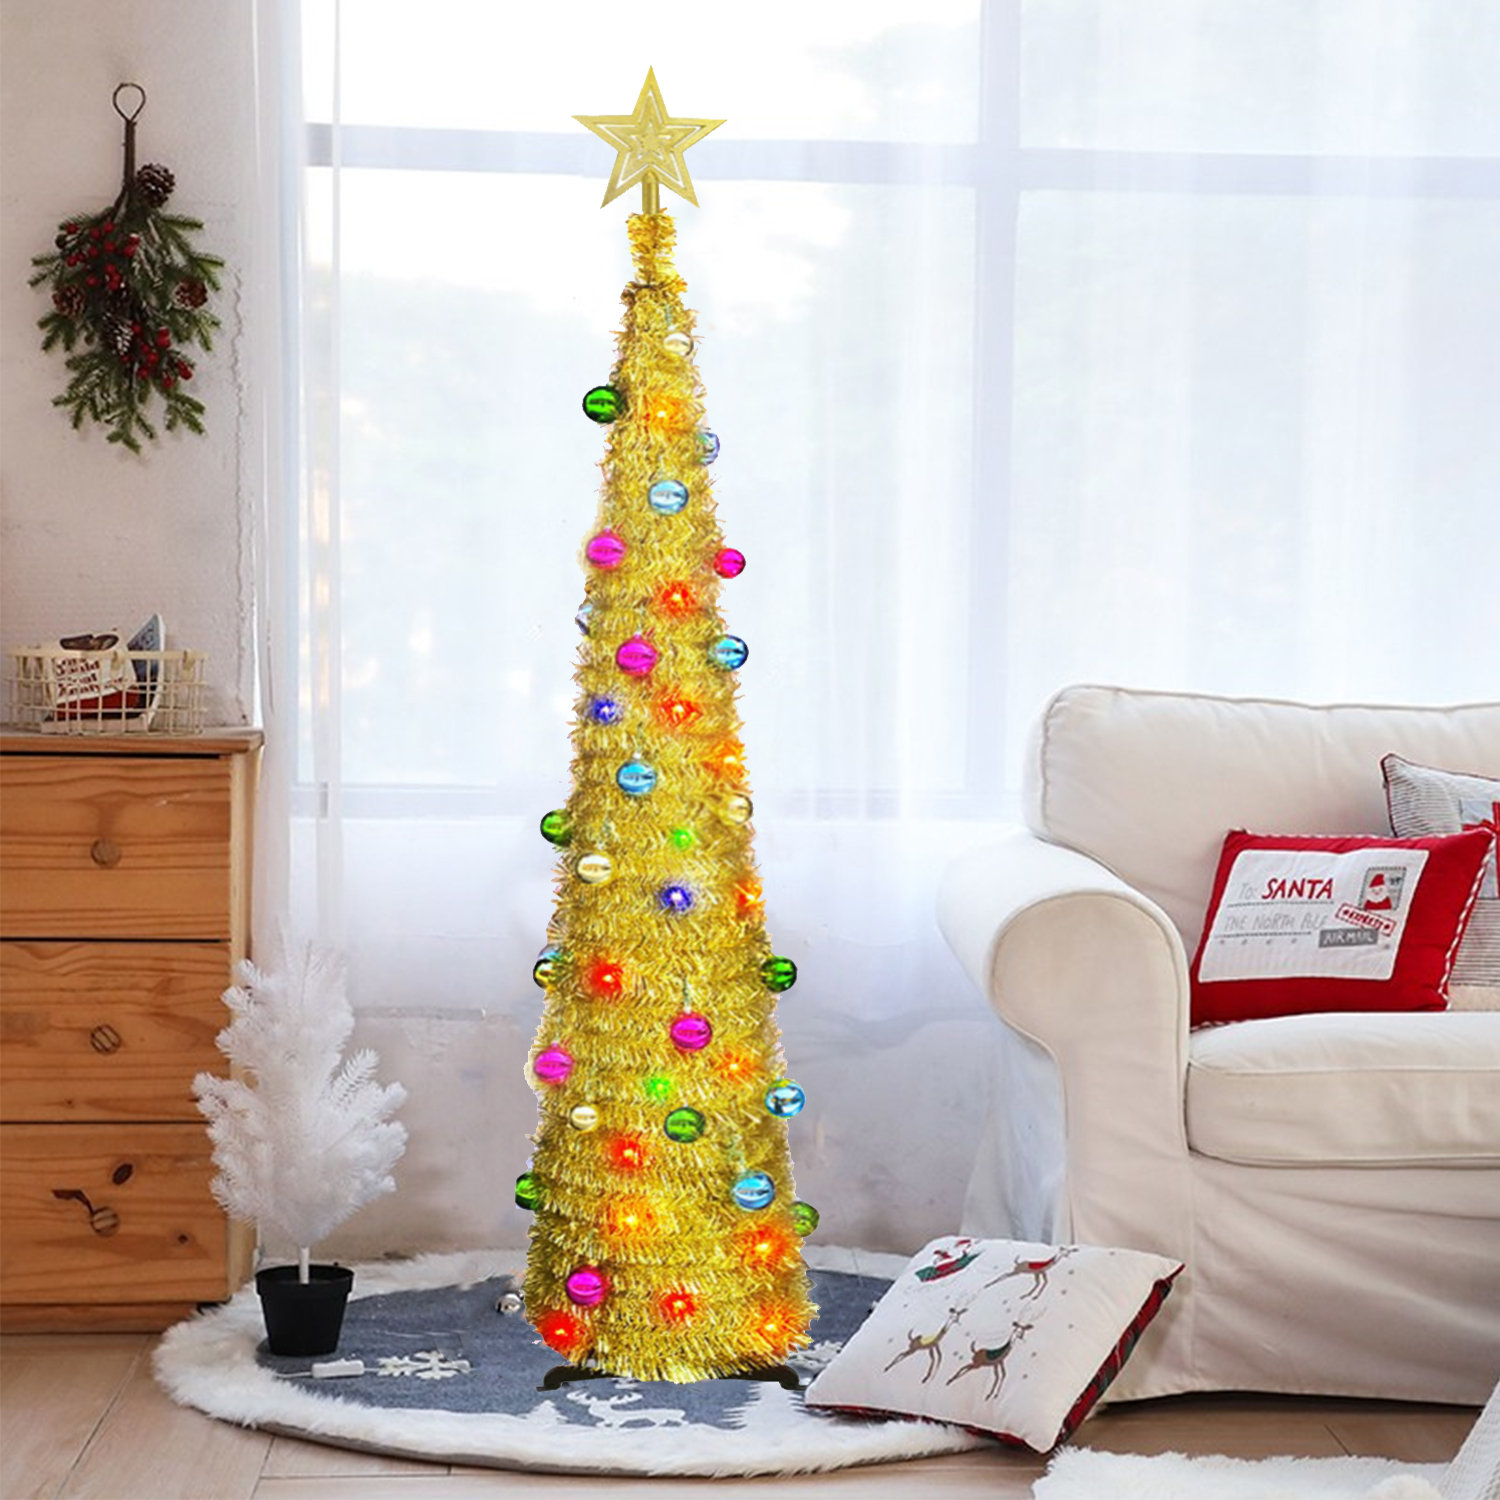 Northlight 4' Prelit Artificial Christmas Tree White Iridescent Pine -  Pink/purple Lights : Target